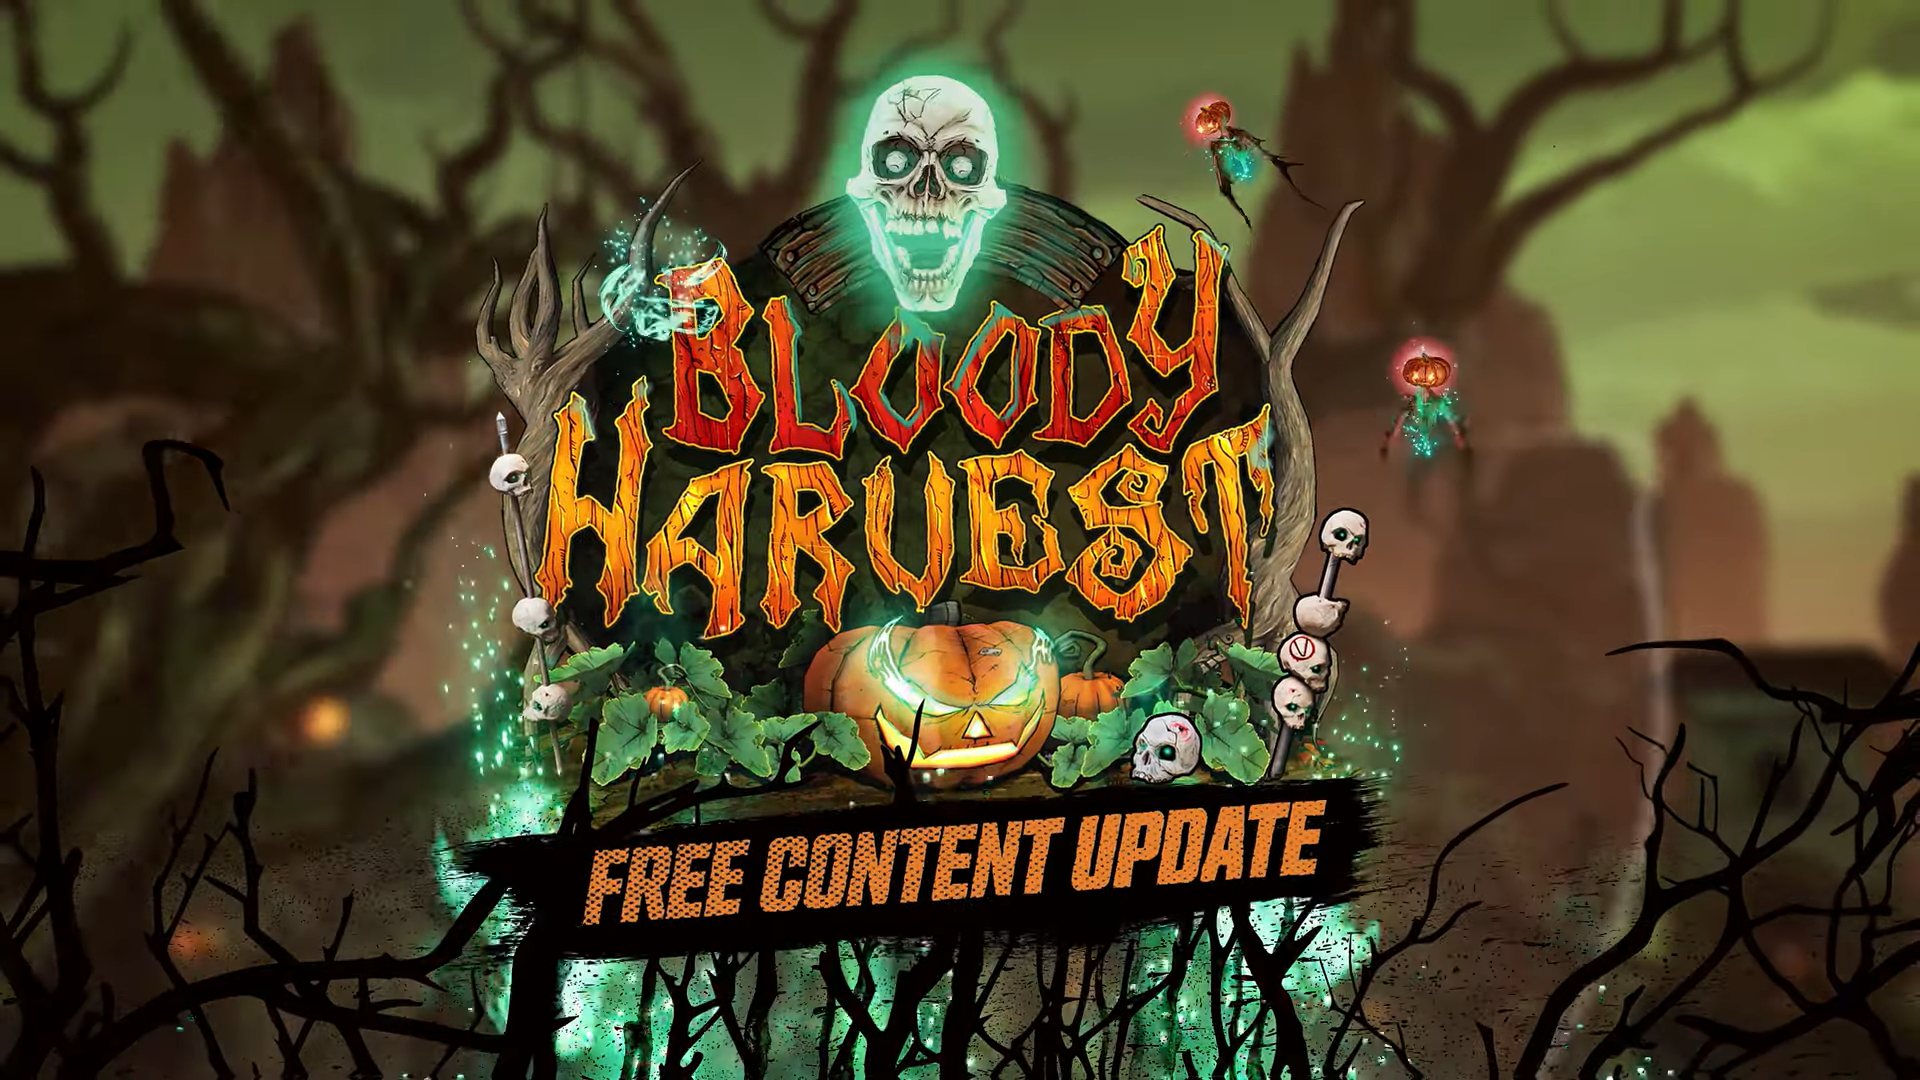 Borderlands 3 Bloody Harvest release date detailed